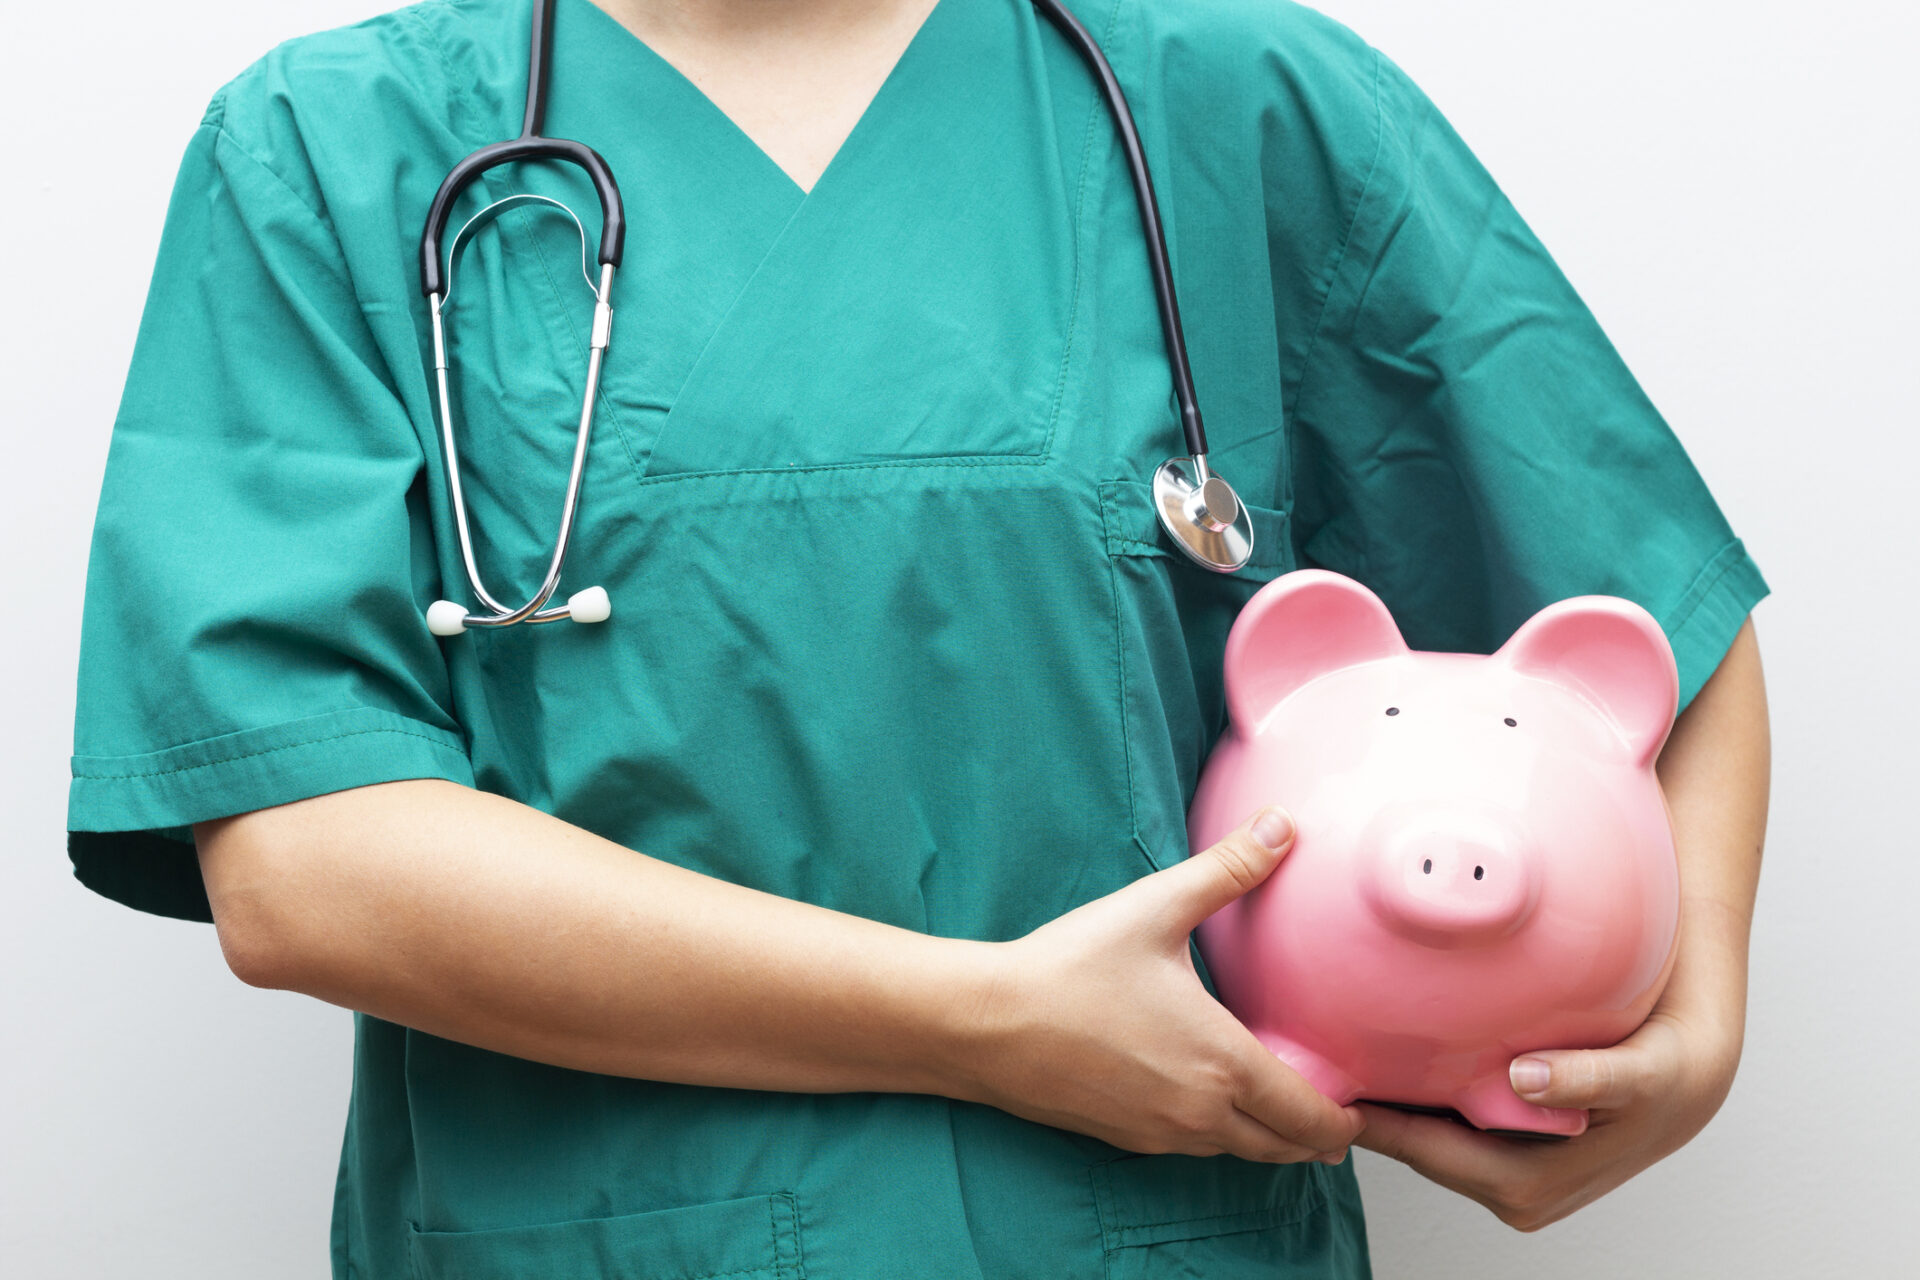 Nurse-with-piggy-bank